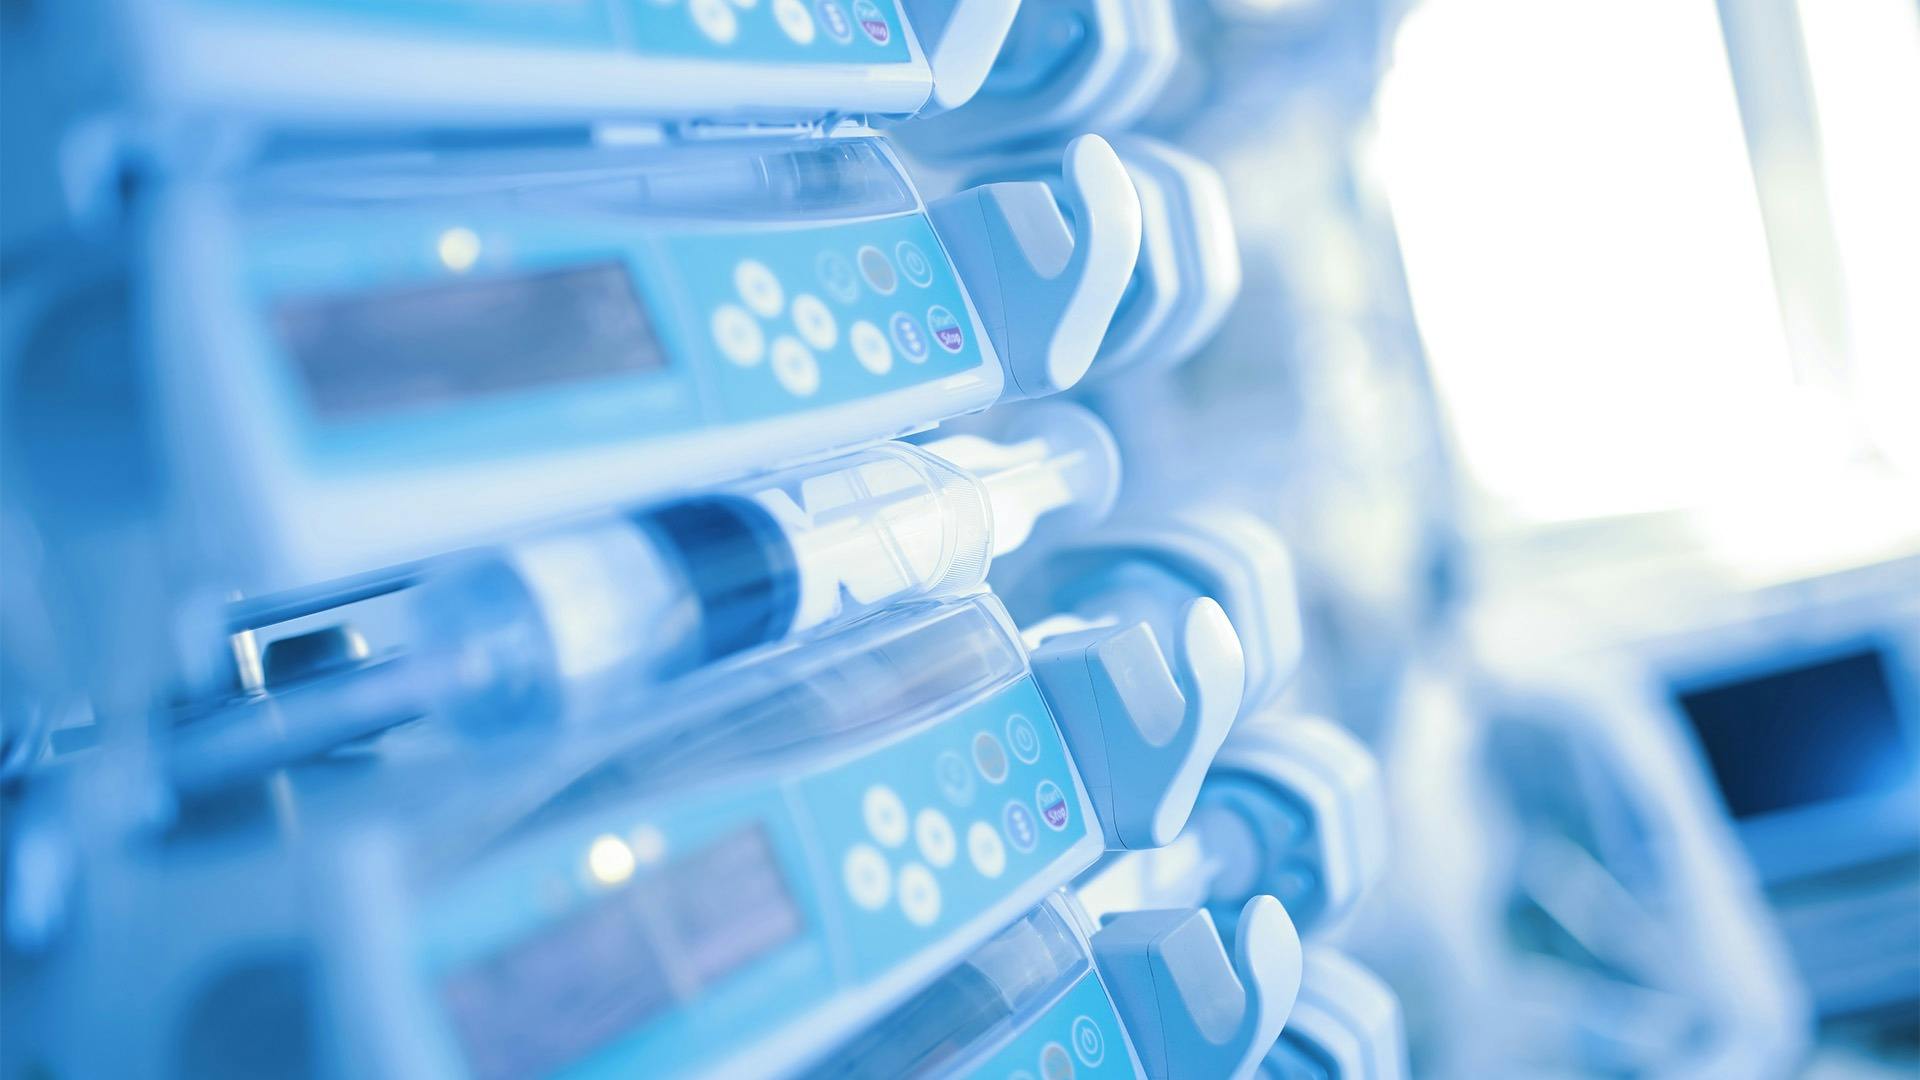 Medizinisches Gerät – elektronisches Medikamenten-Perfusionssystem im Krankenhauszimmer